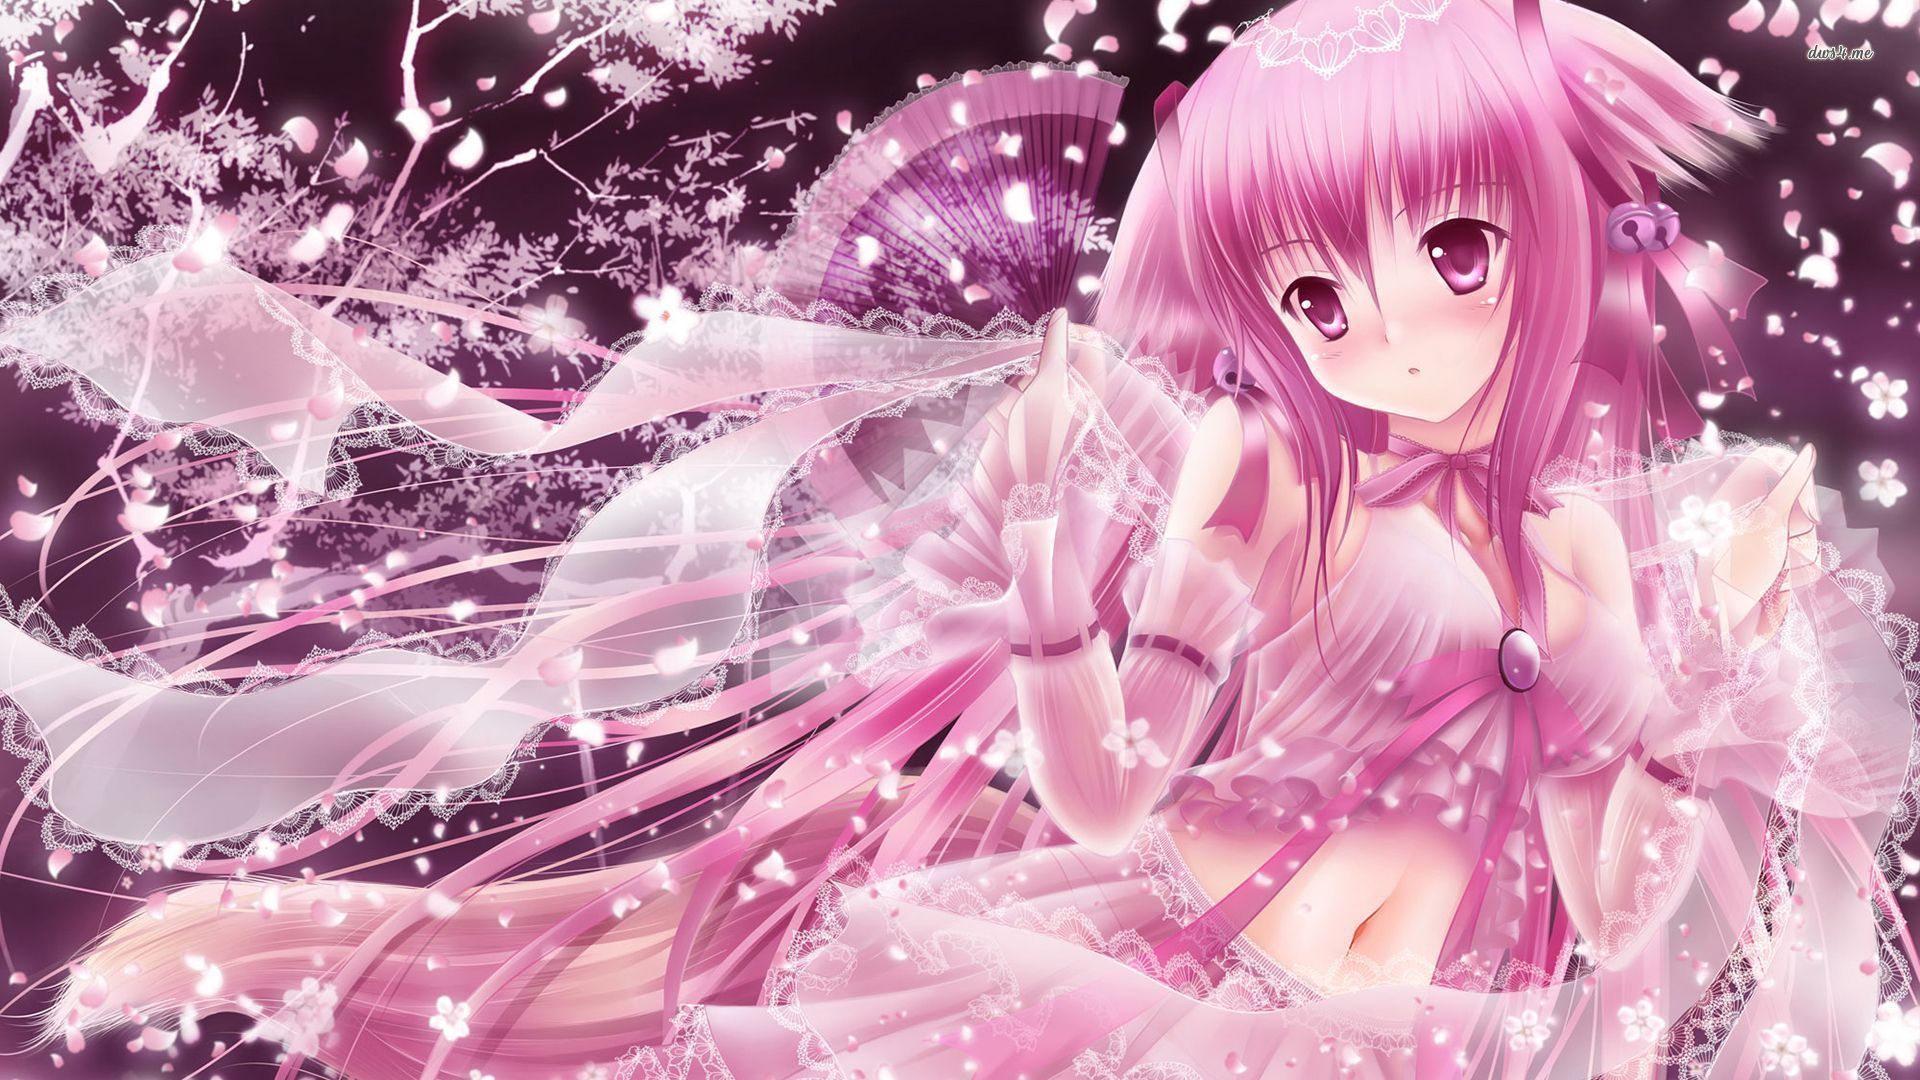 Anime girl in a pink dress wallpaper - Digital Art wallpapers - #13699 - Pink anime